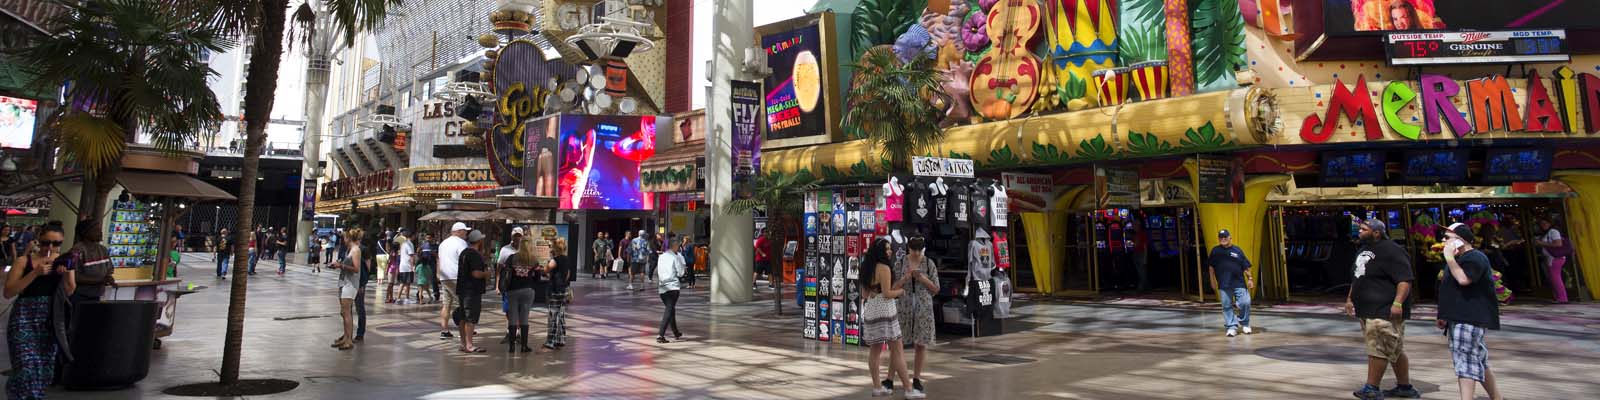 Pictured: Bazaar marketplace in Las Vegas, Nevada.